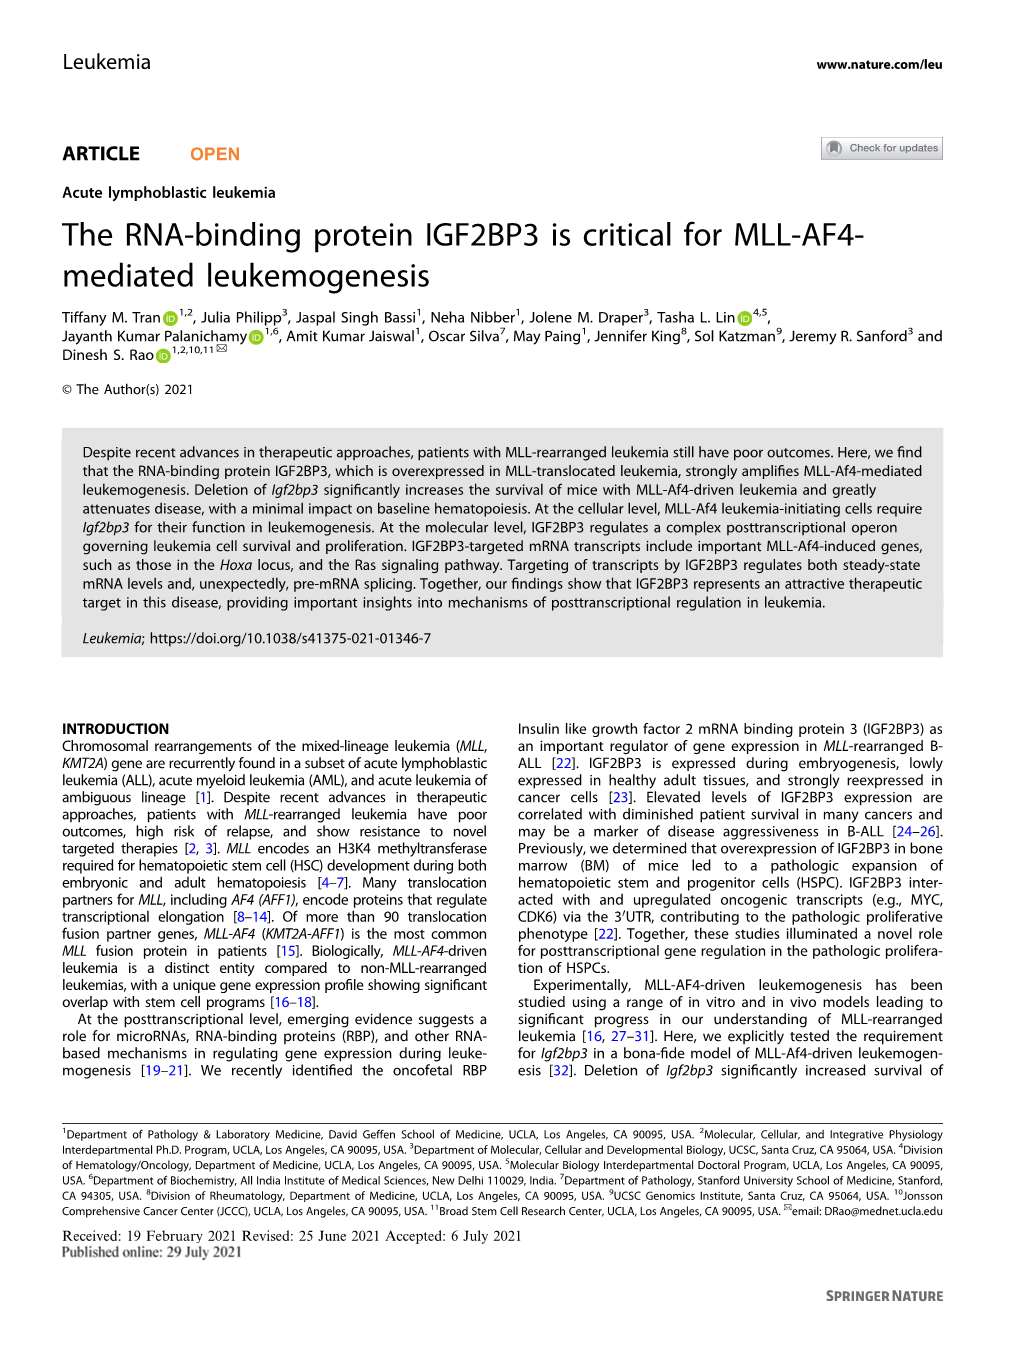 The RNA-Binding Protein IGF2BP3 Is Critical for MLL-AF4-Mediated Leukemogenesis